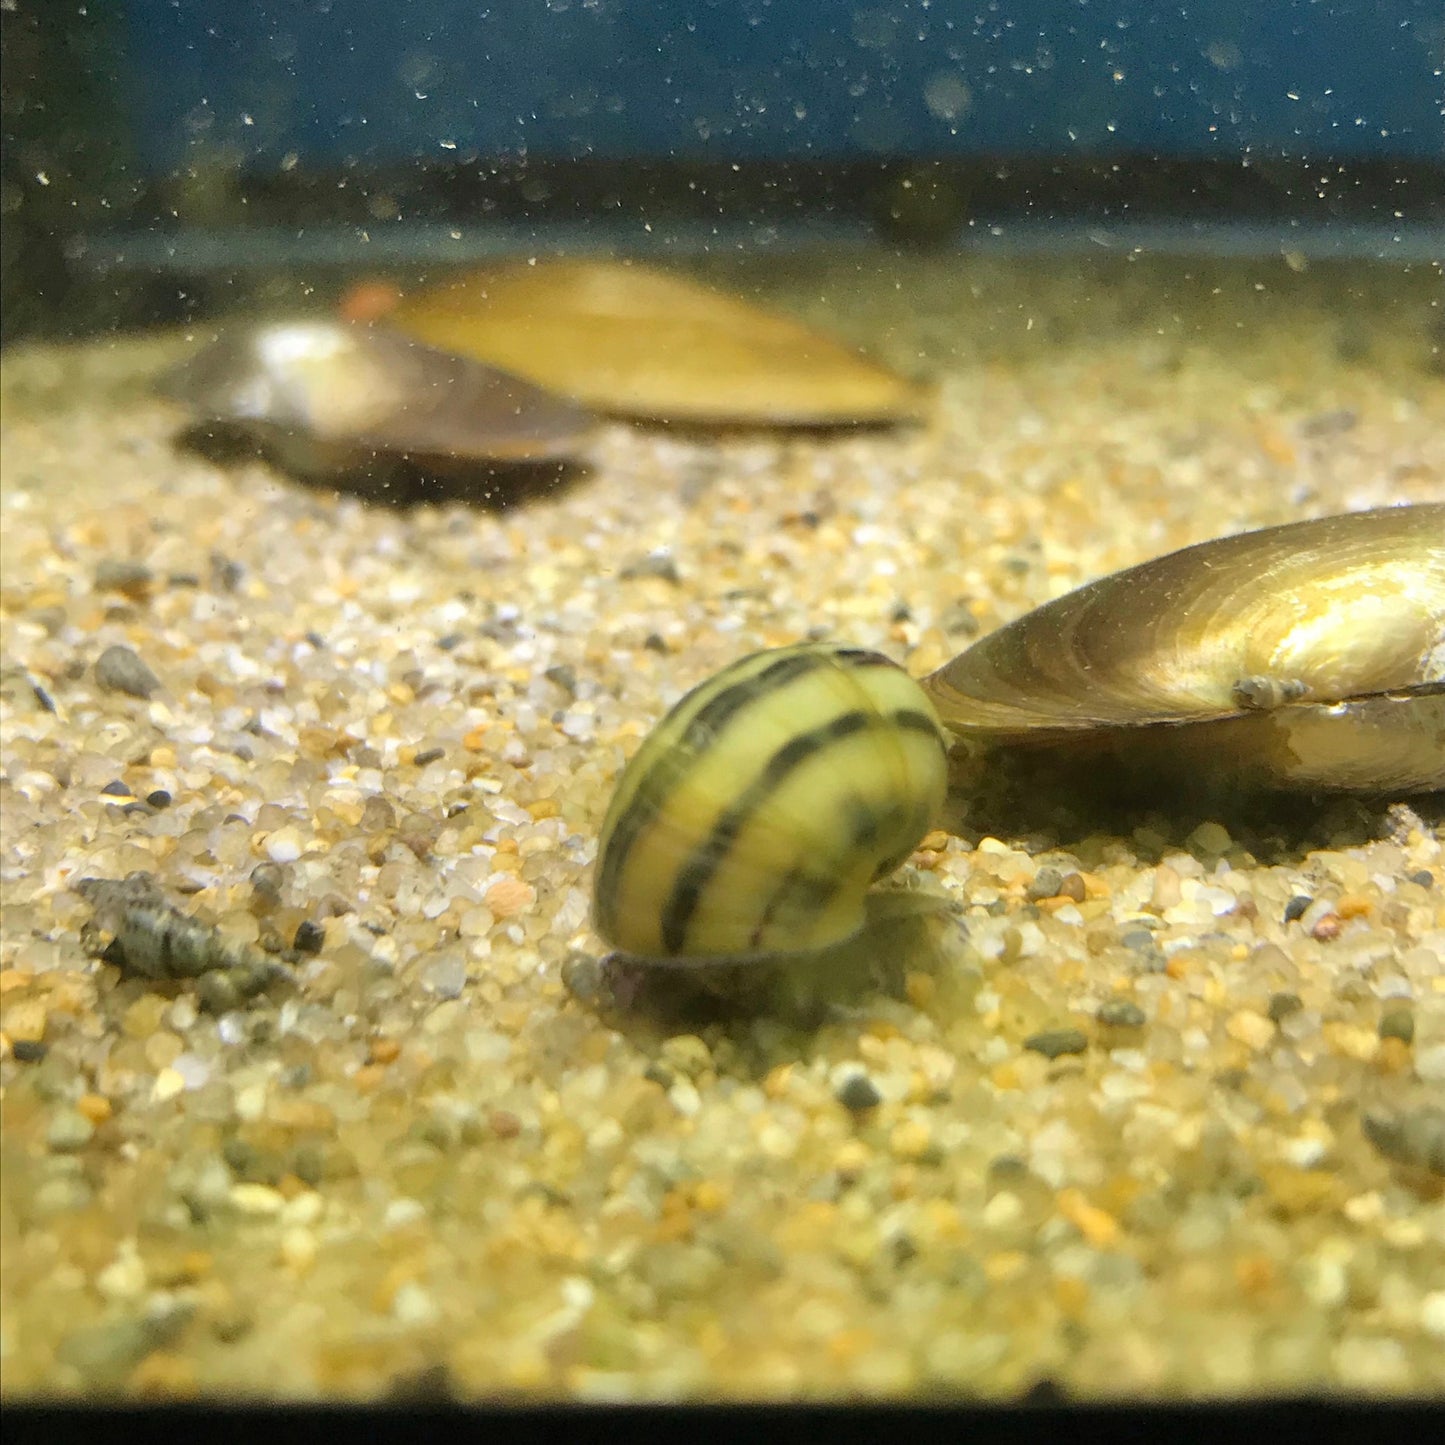 Spixi Striped Mystery Snail